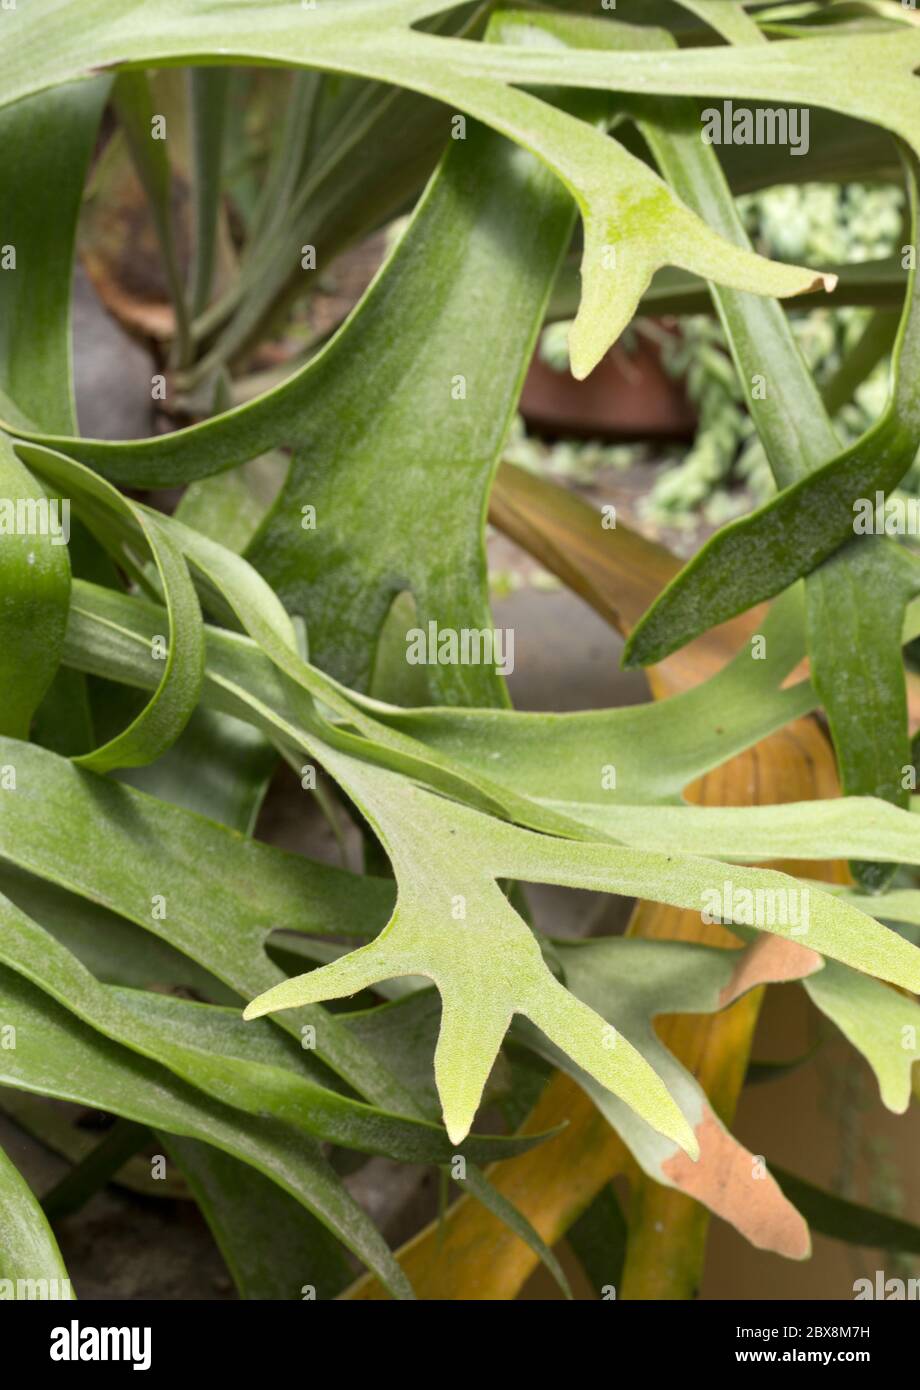 elkhorn fern or common staghorn fern (Platycerium bifurcatum) Stock Photo